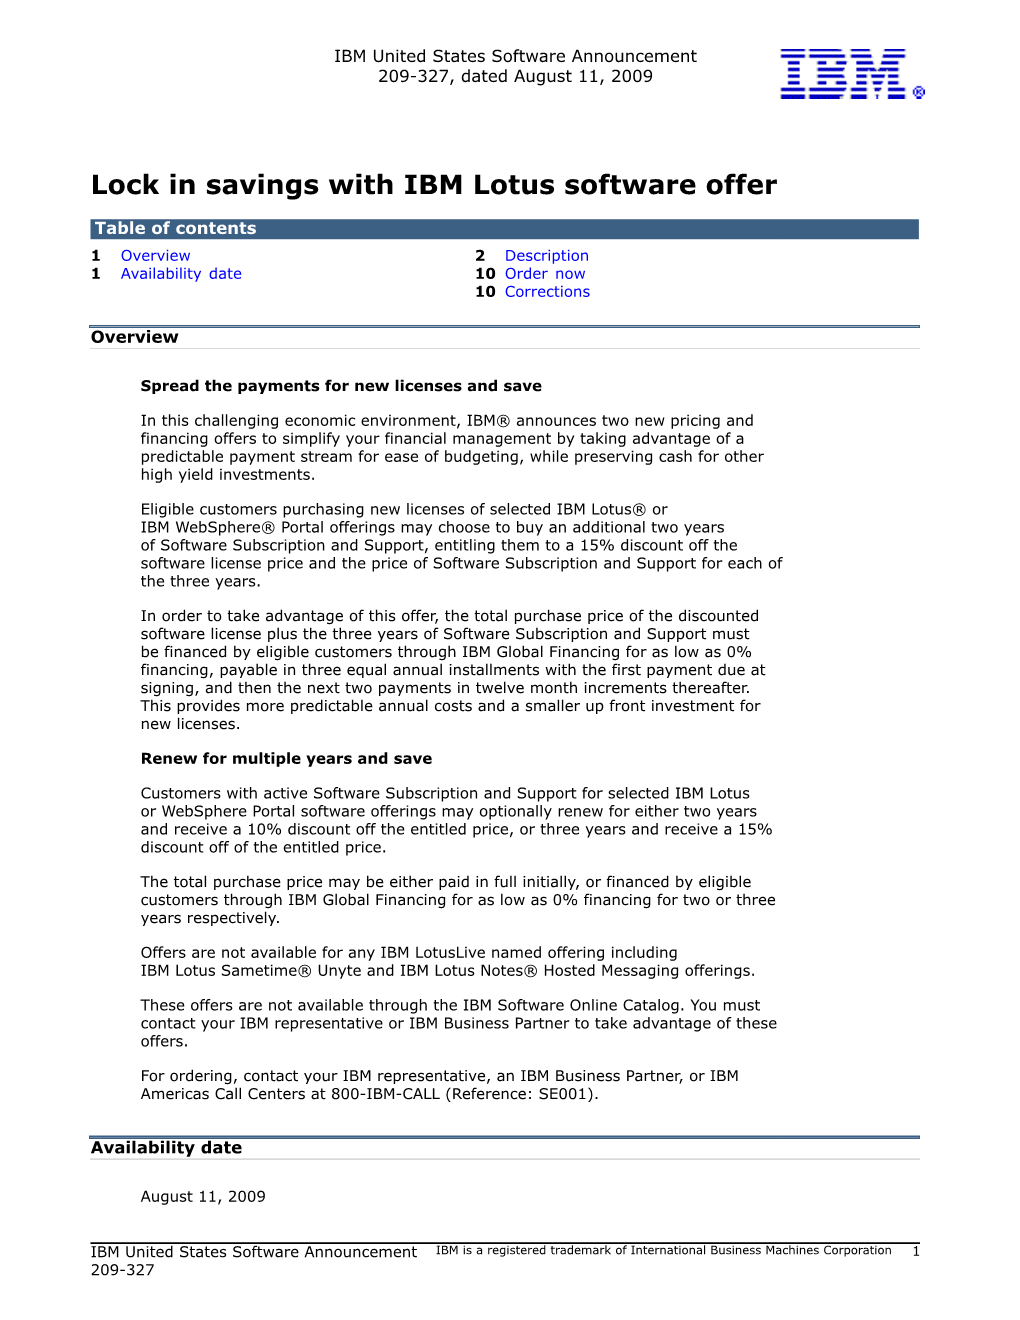 Lock in Savings with IBM Lotus Software Offer